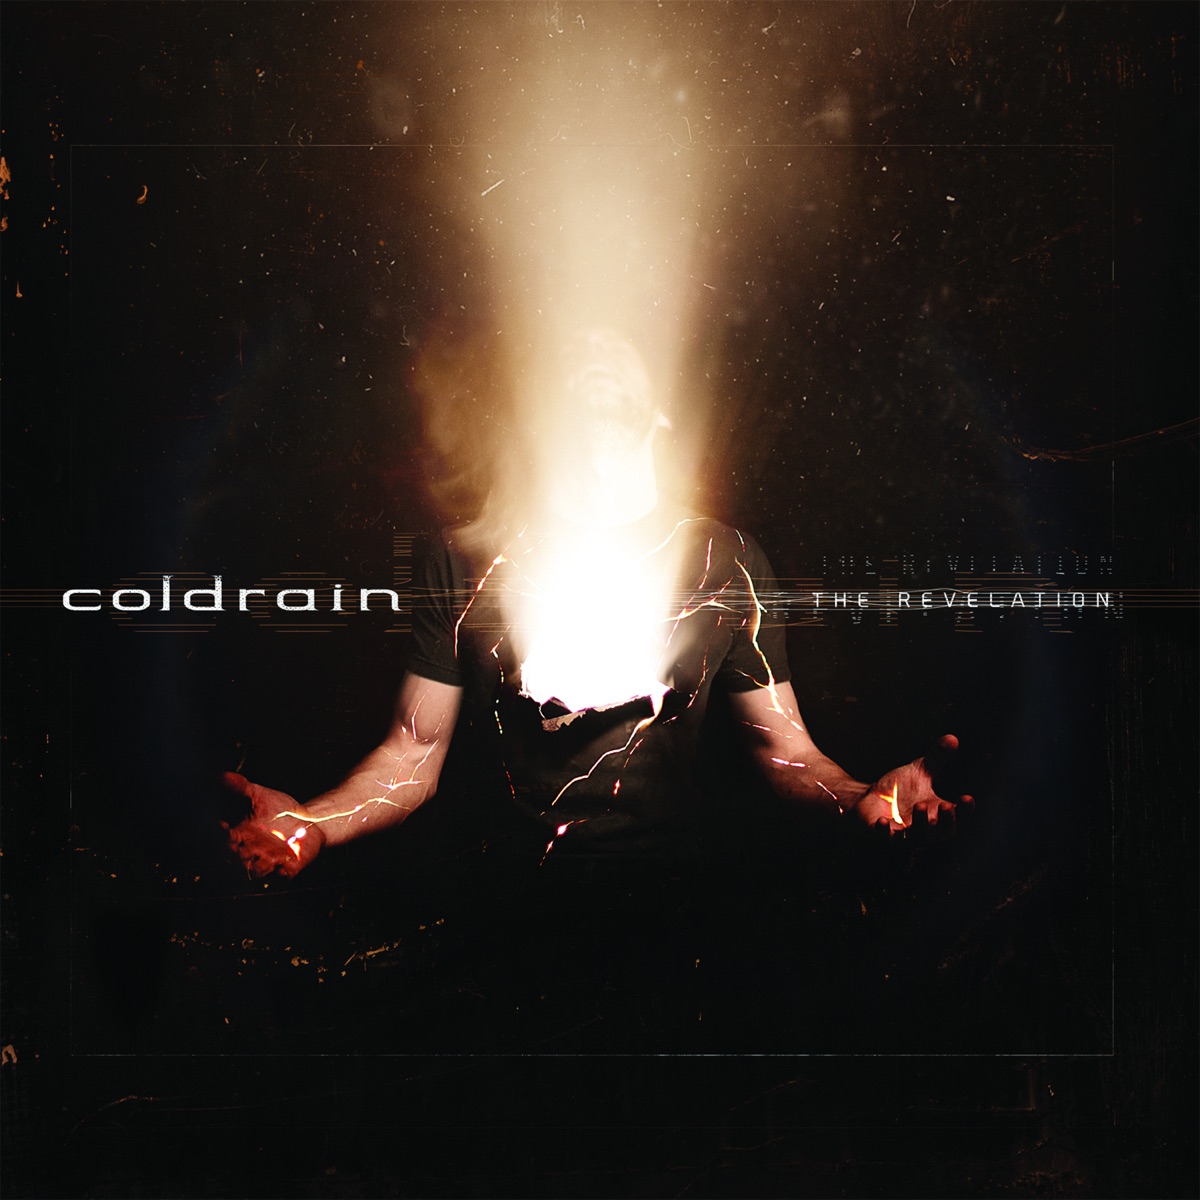 The Revelation - Album by coldrain - Apple Music